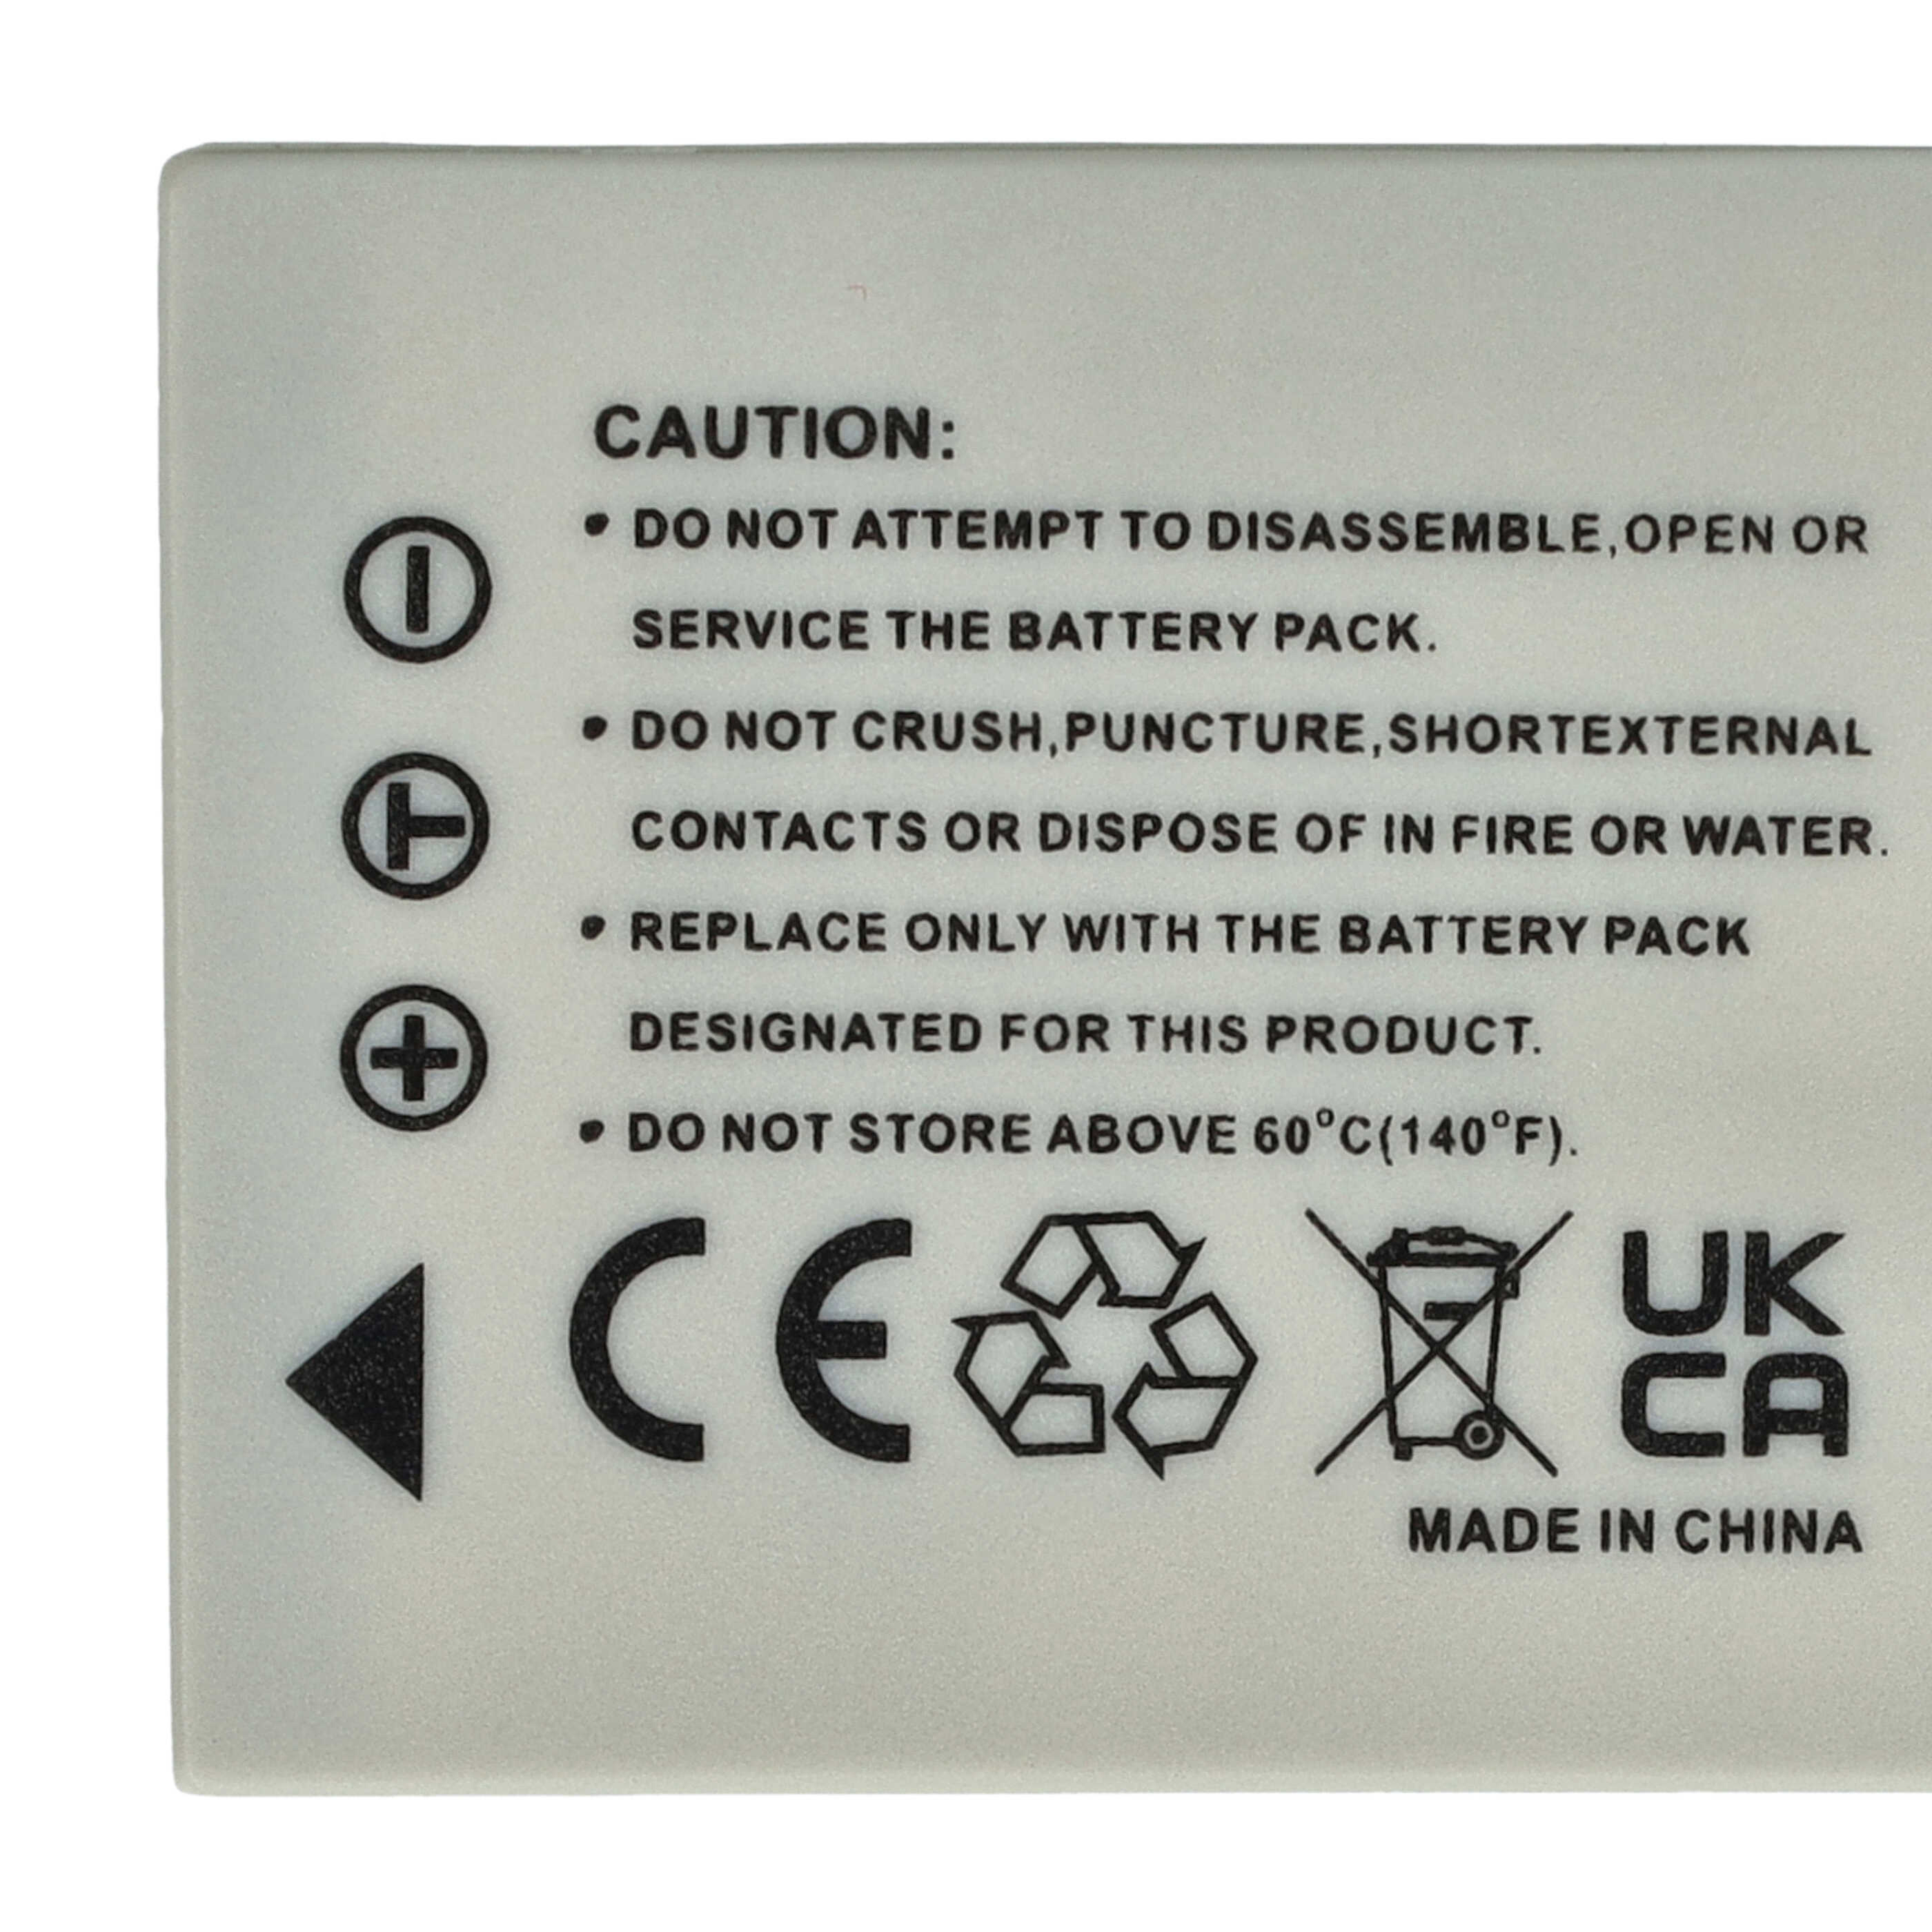 Battery Replacement for Fuji / Fujifilm NP-40, NP-40N - 500mAh, 3.6V, Li-Ion